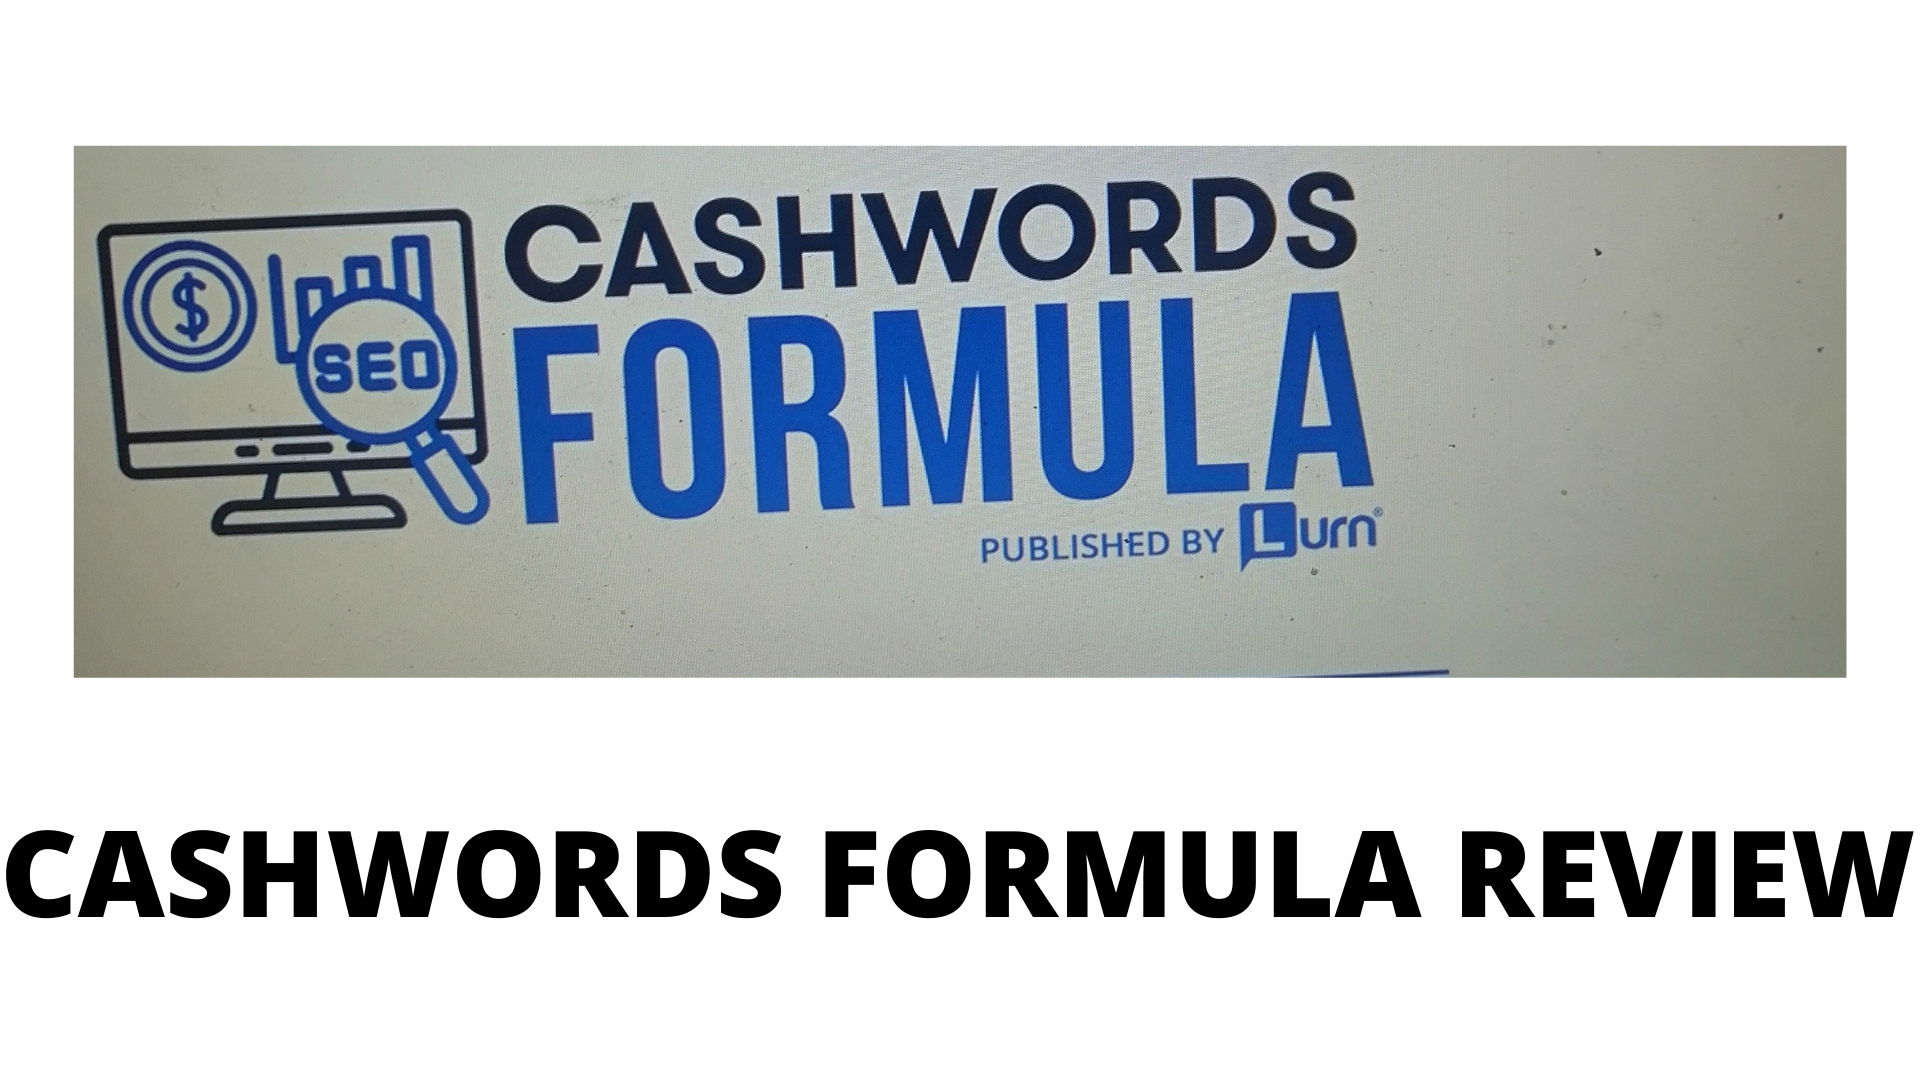 Cashwords Formula - Jeff Lenney